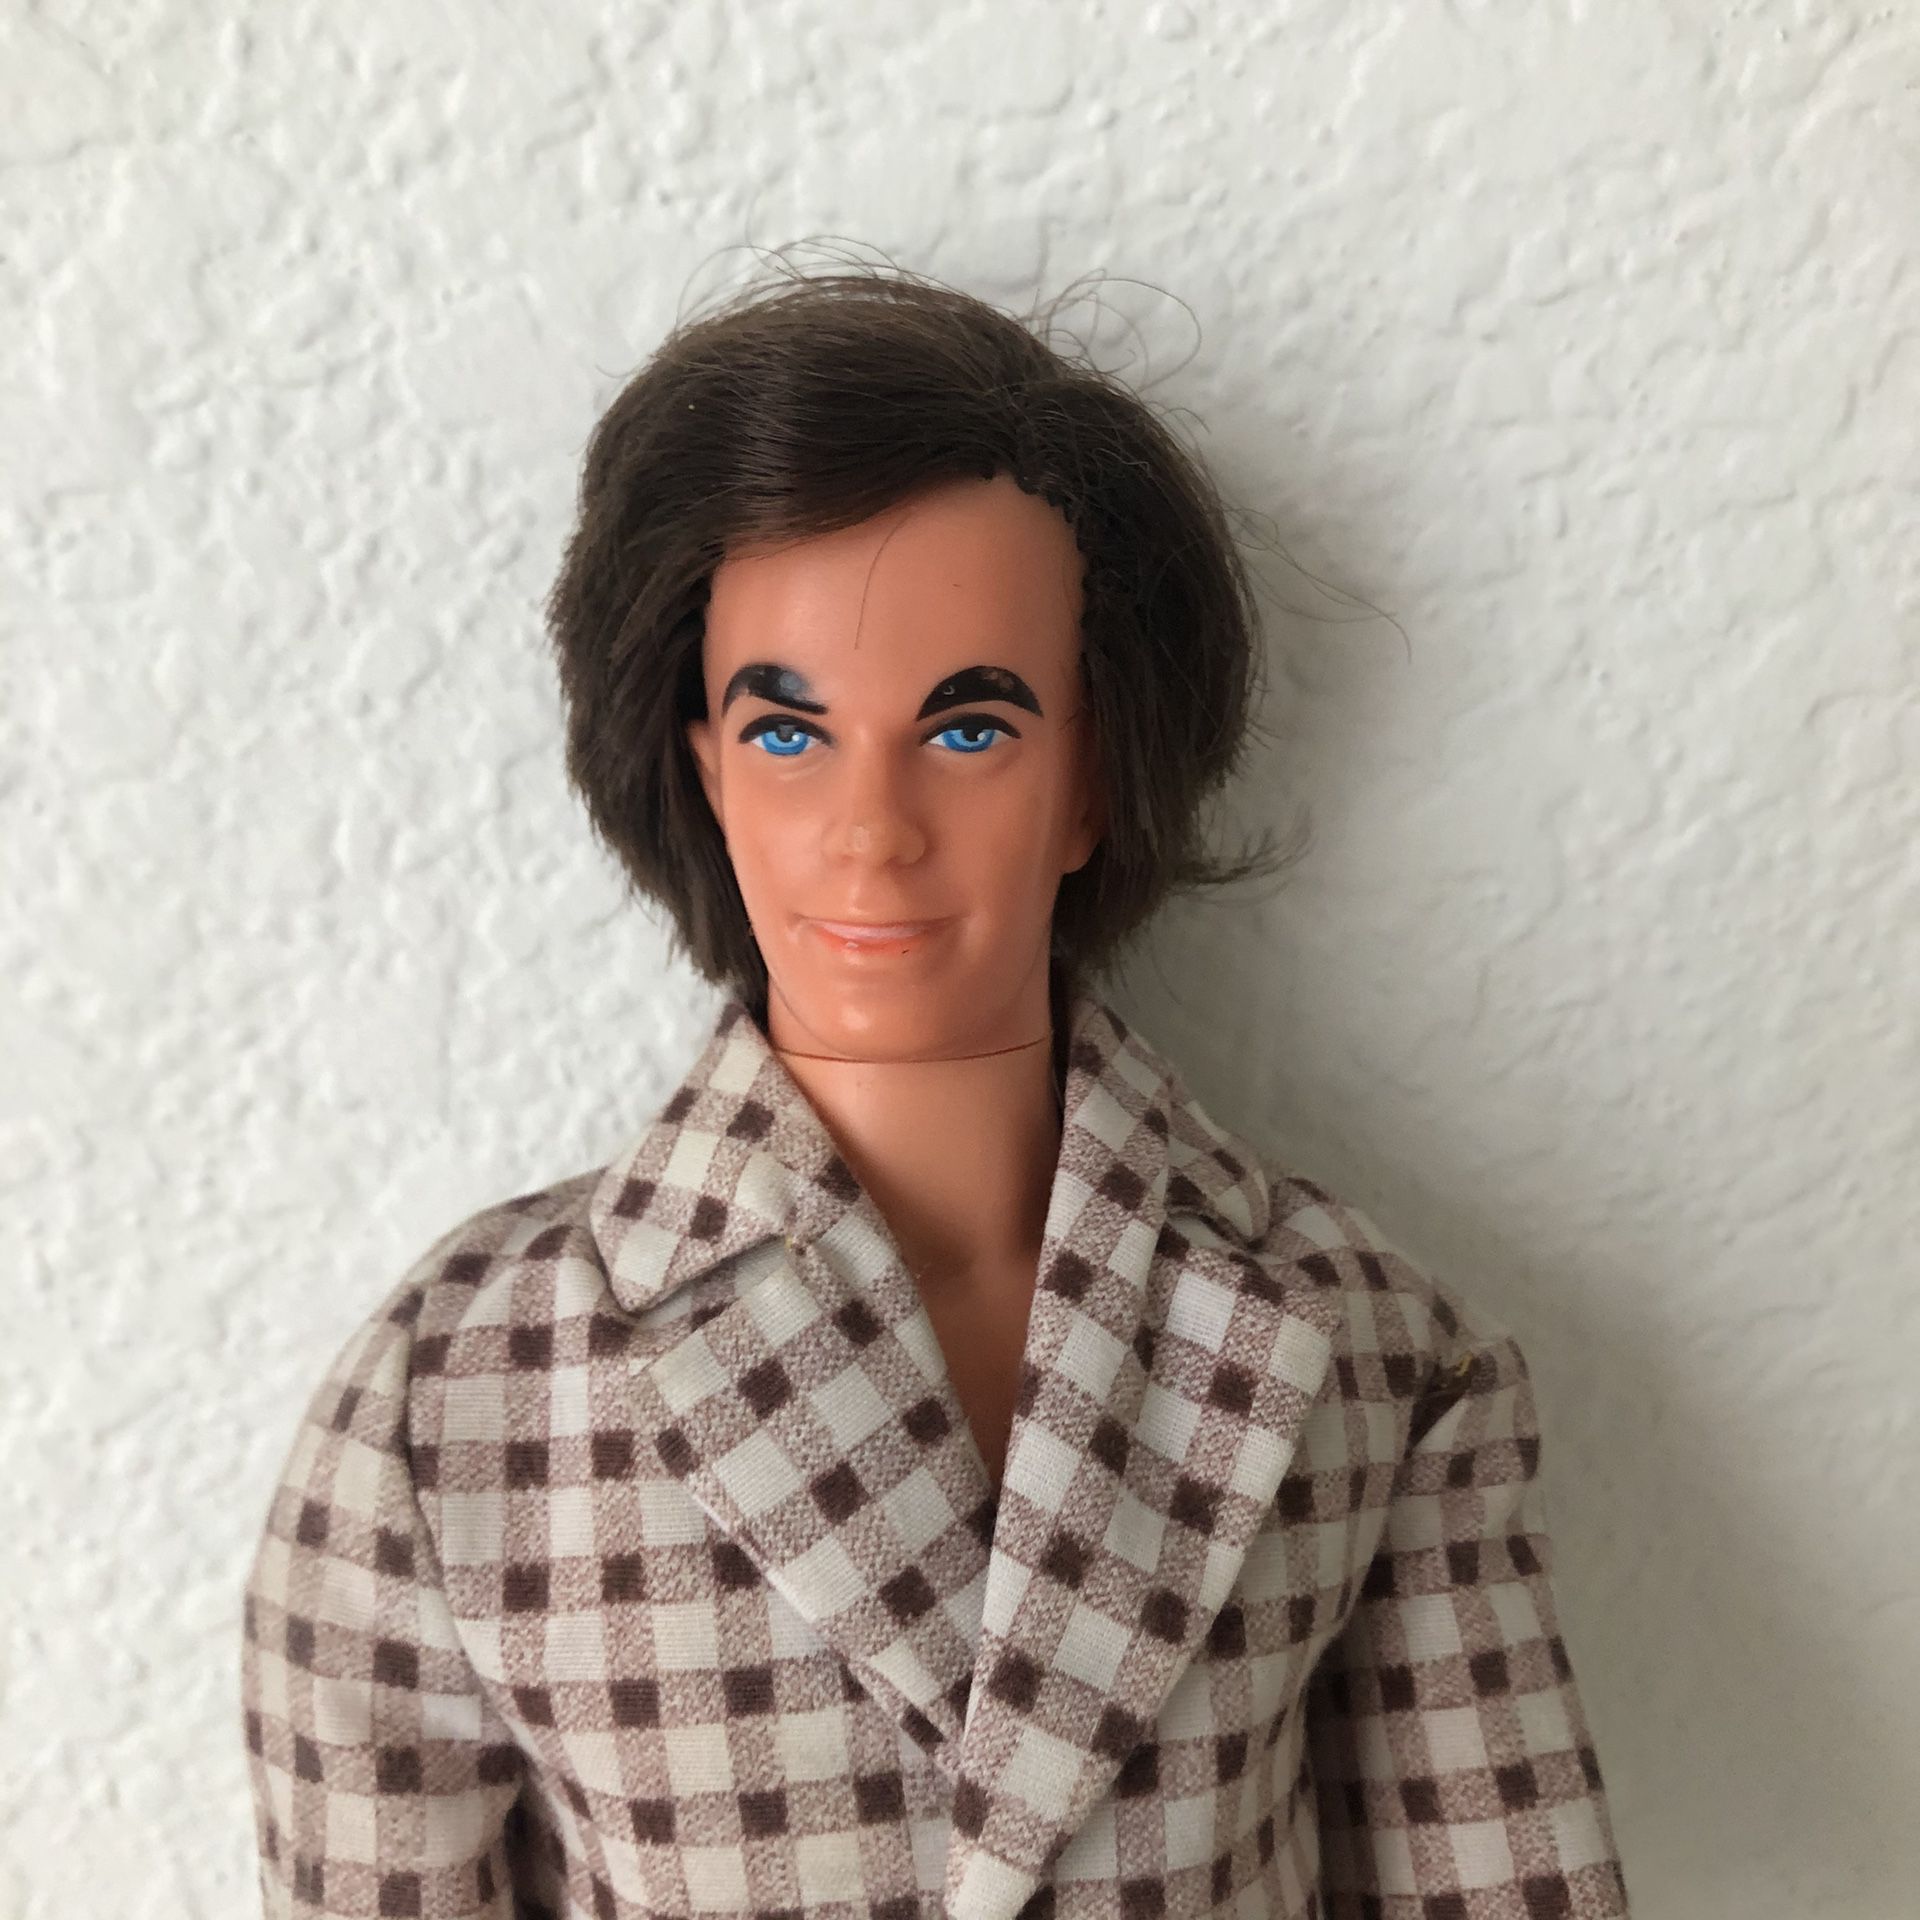 Vintage 1960s Barbie Ken with hair Neil diamond and Neil diamond look